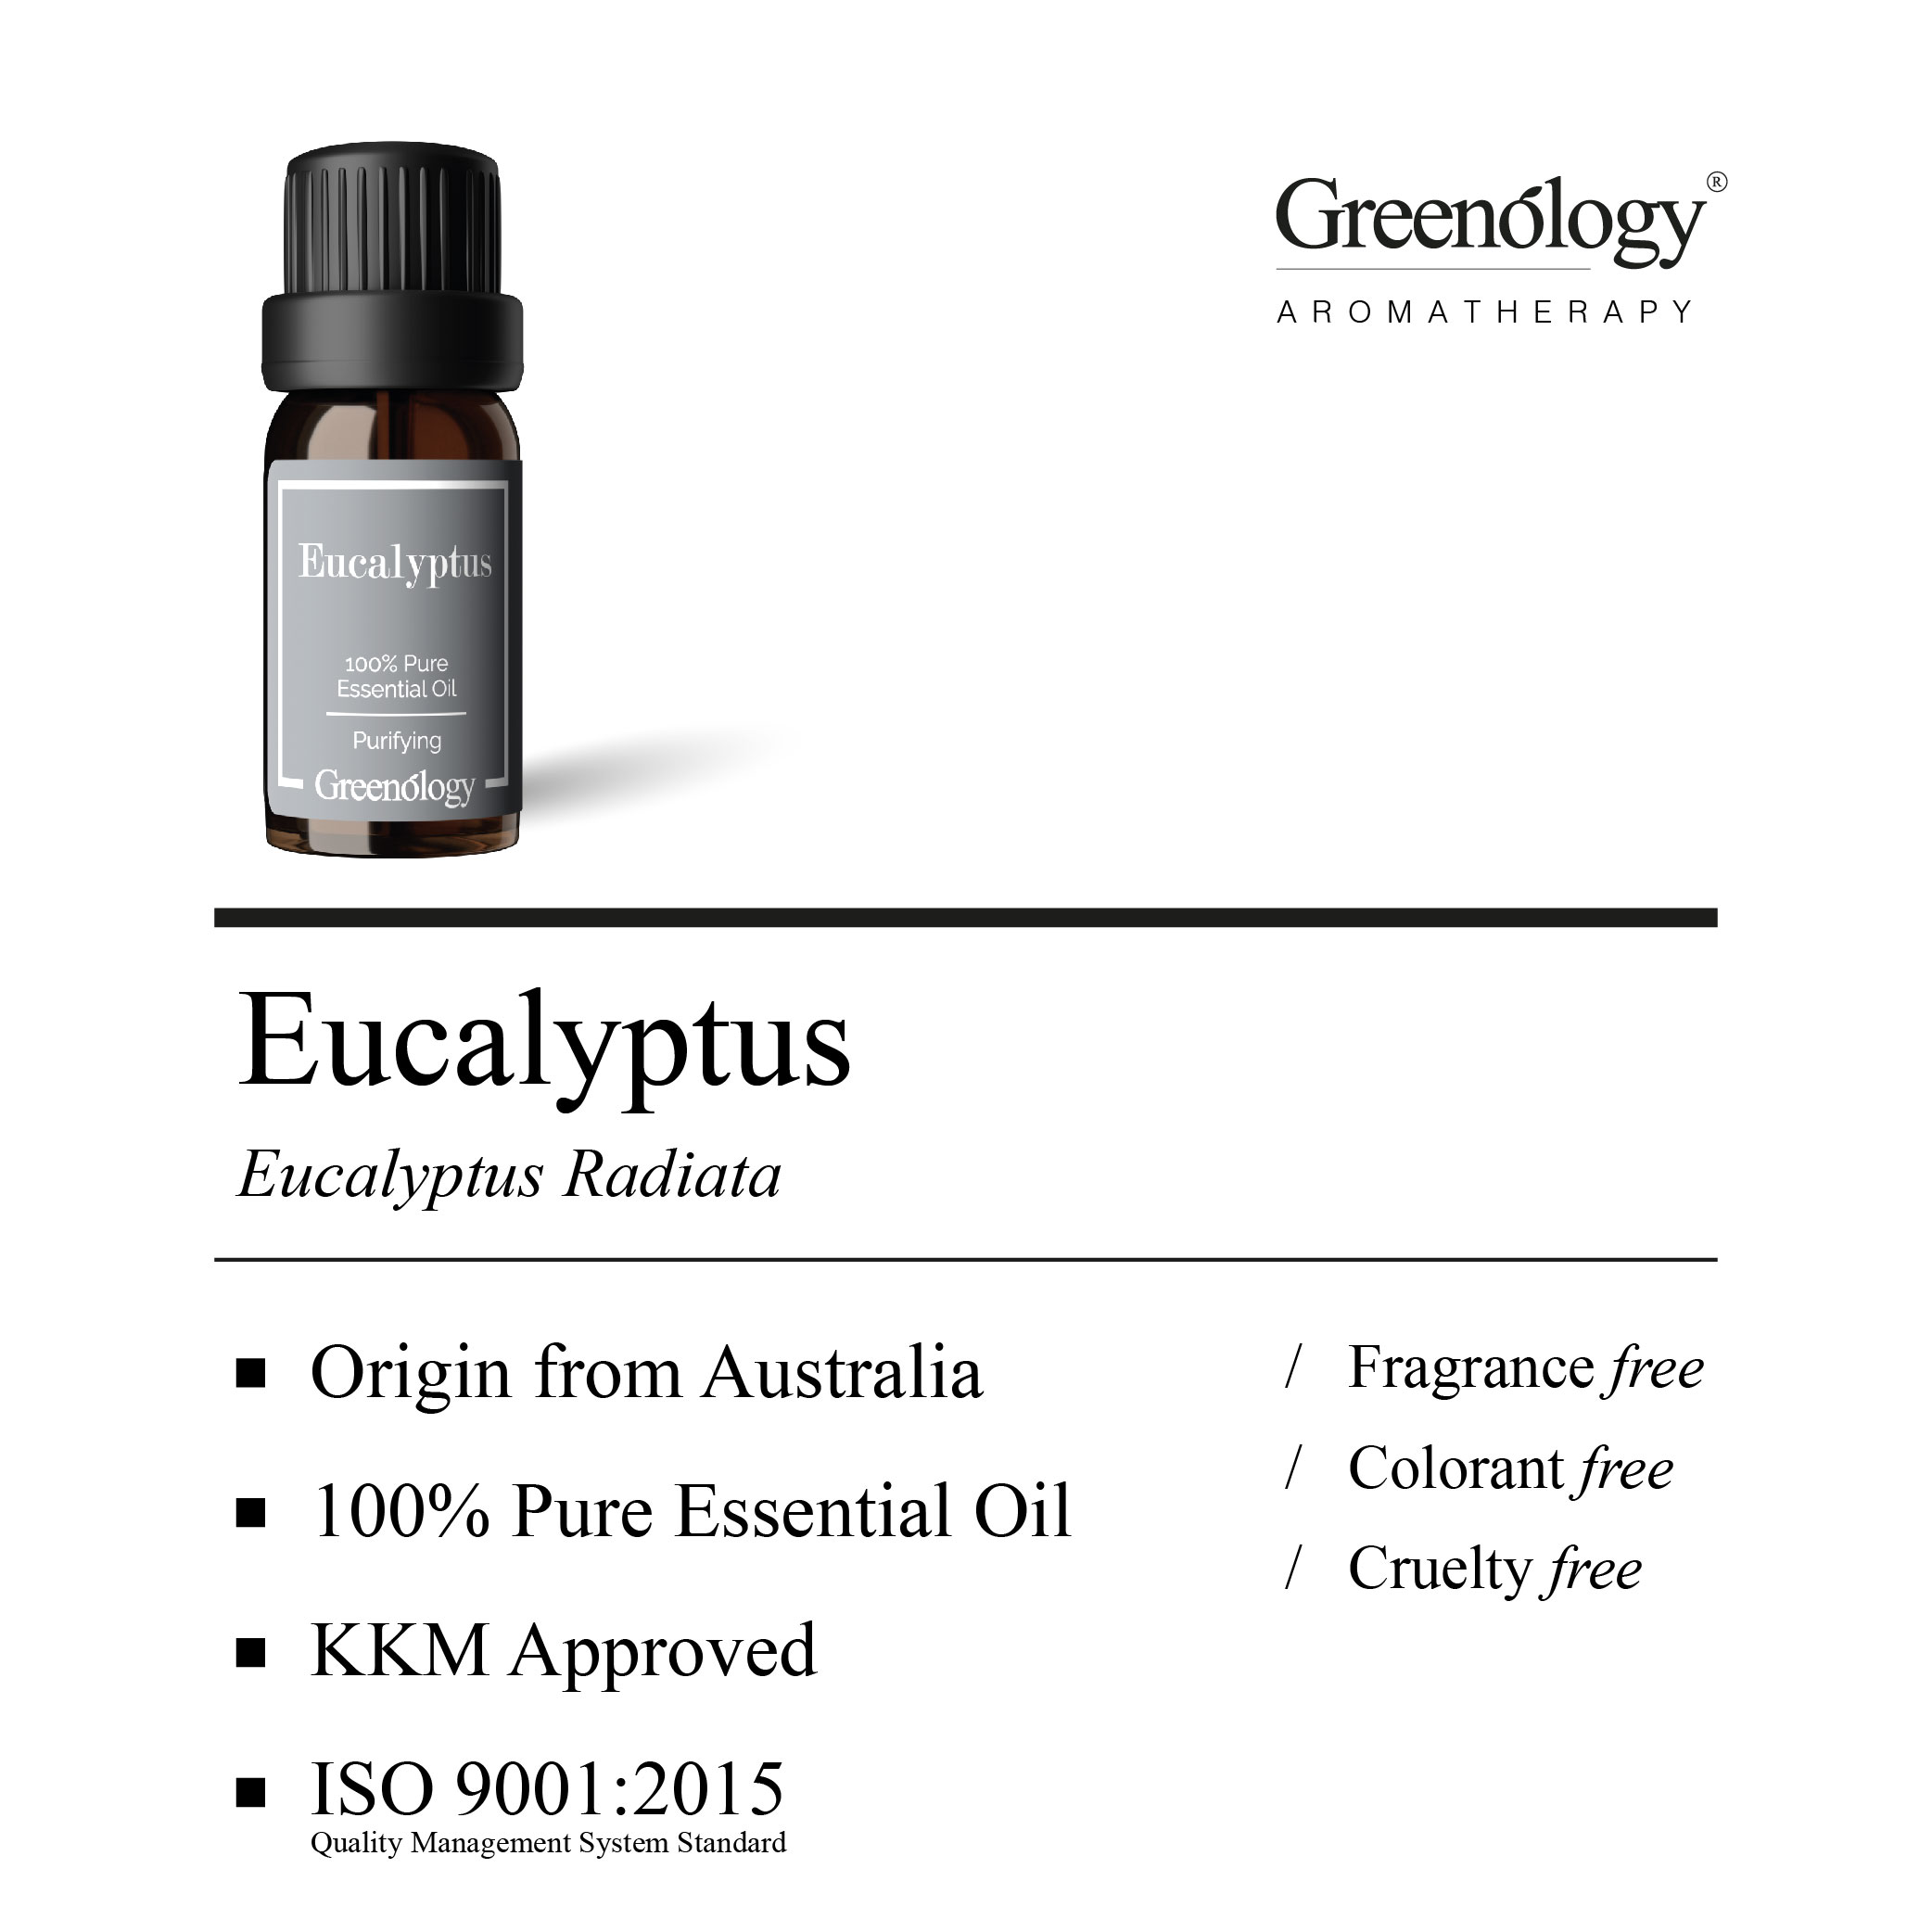 Greenology Aromatherapy 100% Pure Purifying Eucalyptus Essential Oil